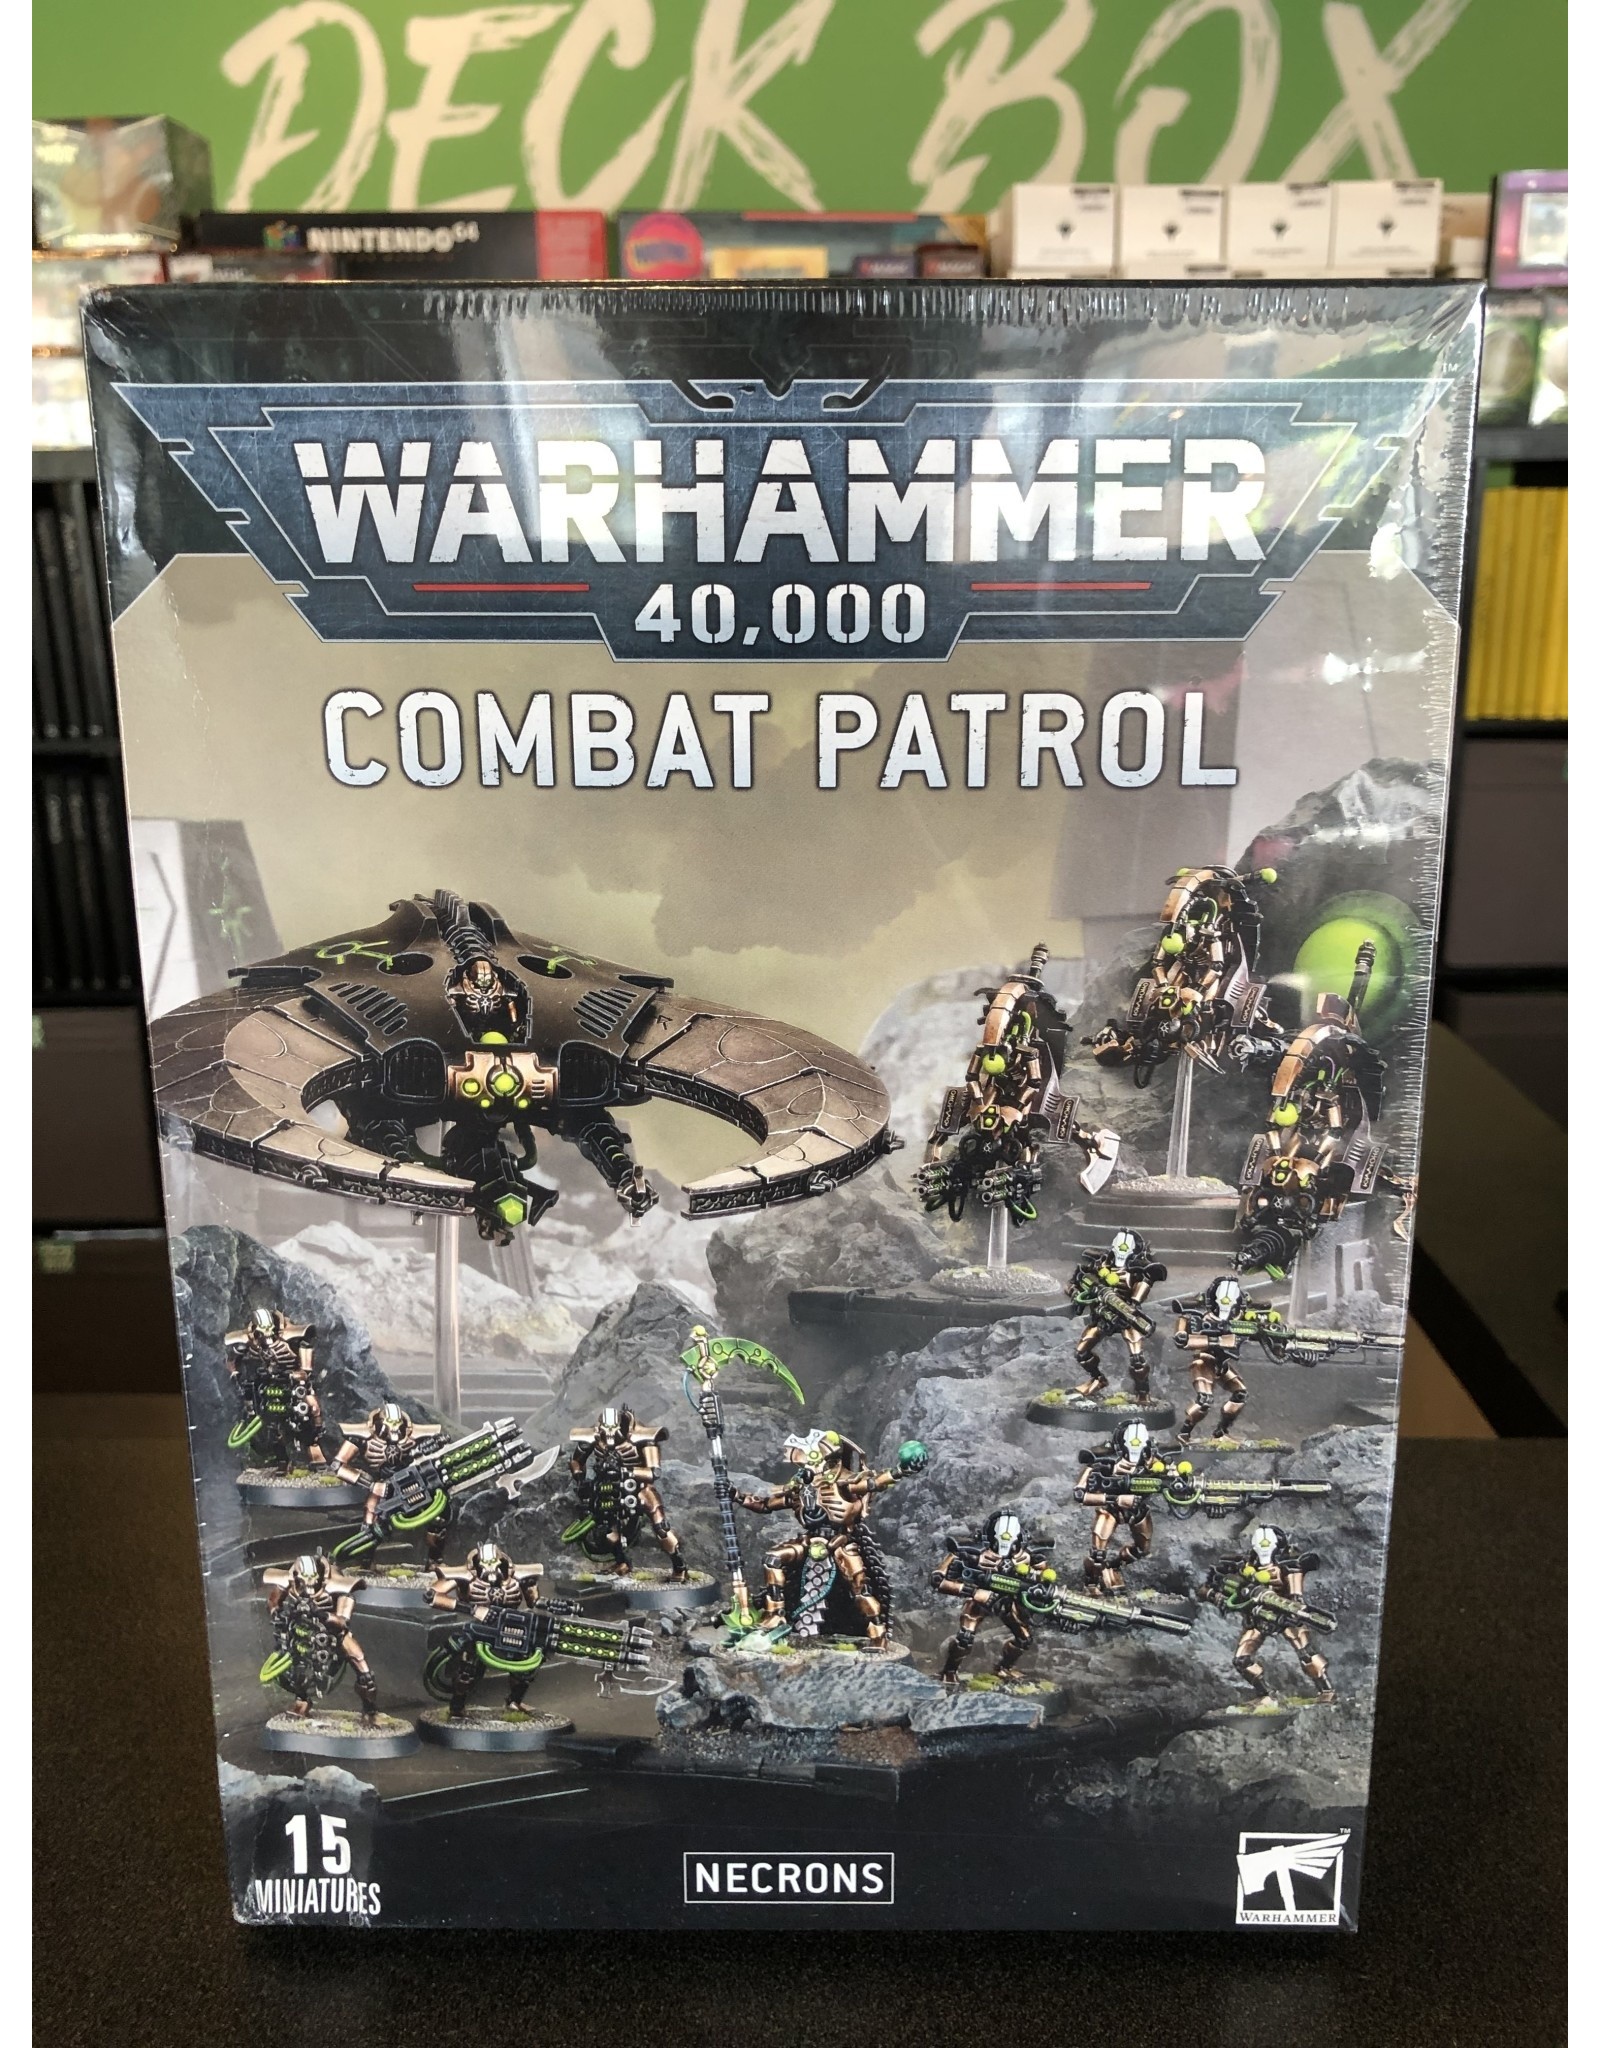 Warhammer 40K - Combat Patrol - Necrons